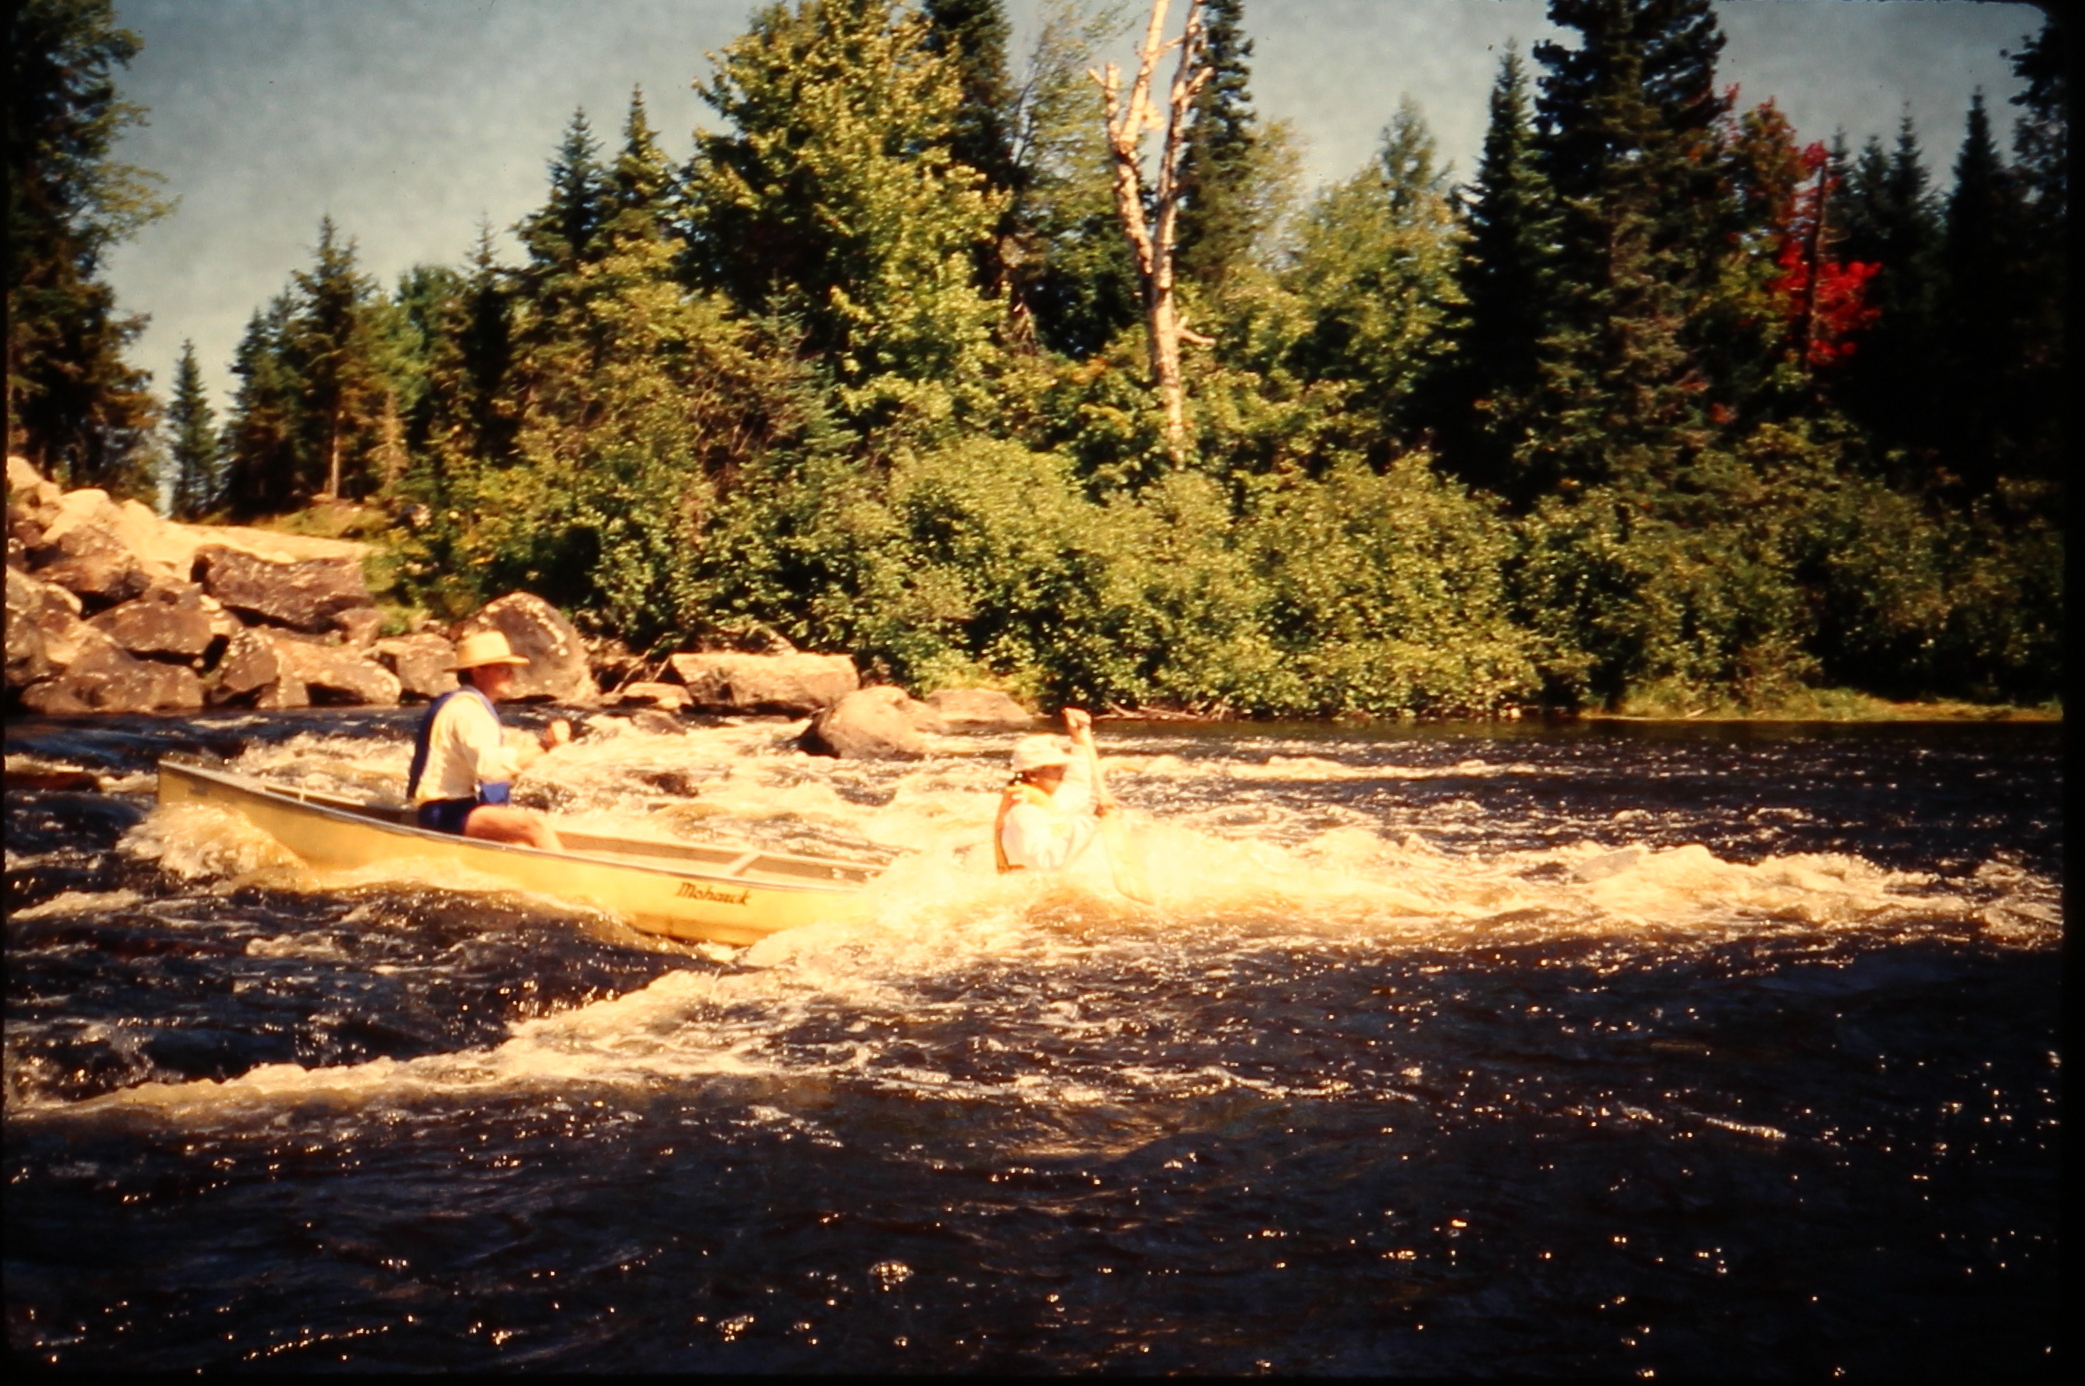 19890903.02 - USA ME -- MooseRiver - Jerry Somesh - Moose River Rapids 1 - MB01T01B11S02.JPG